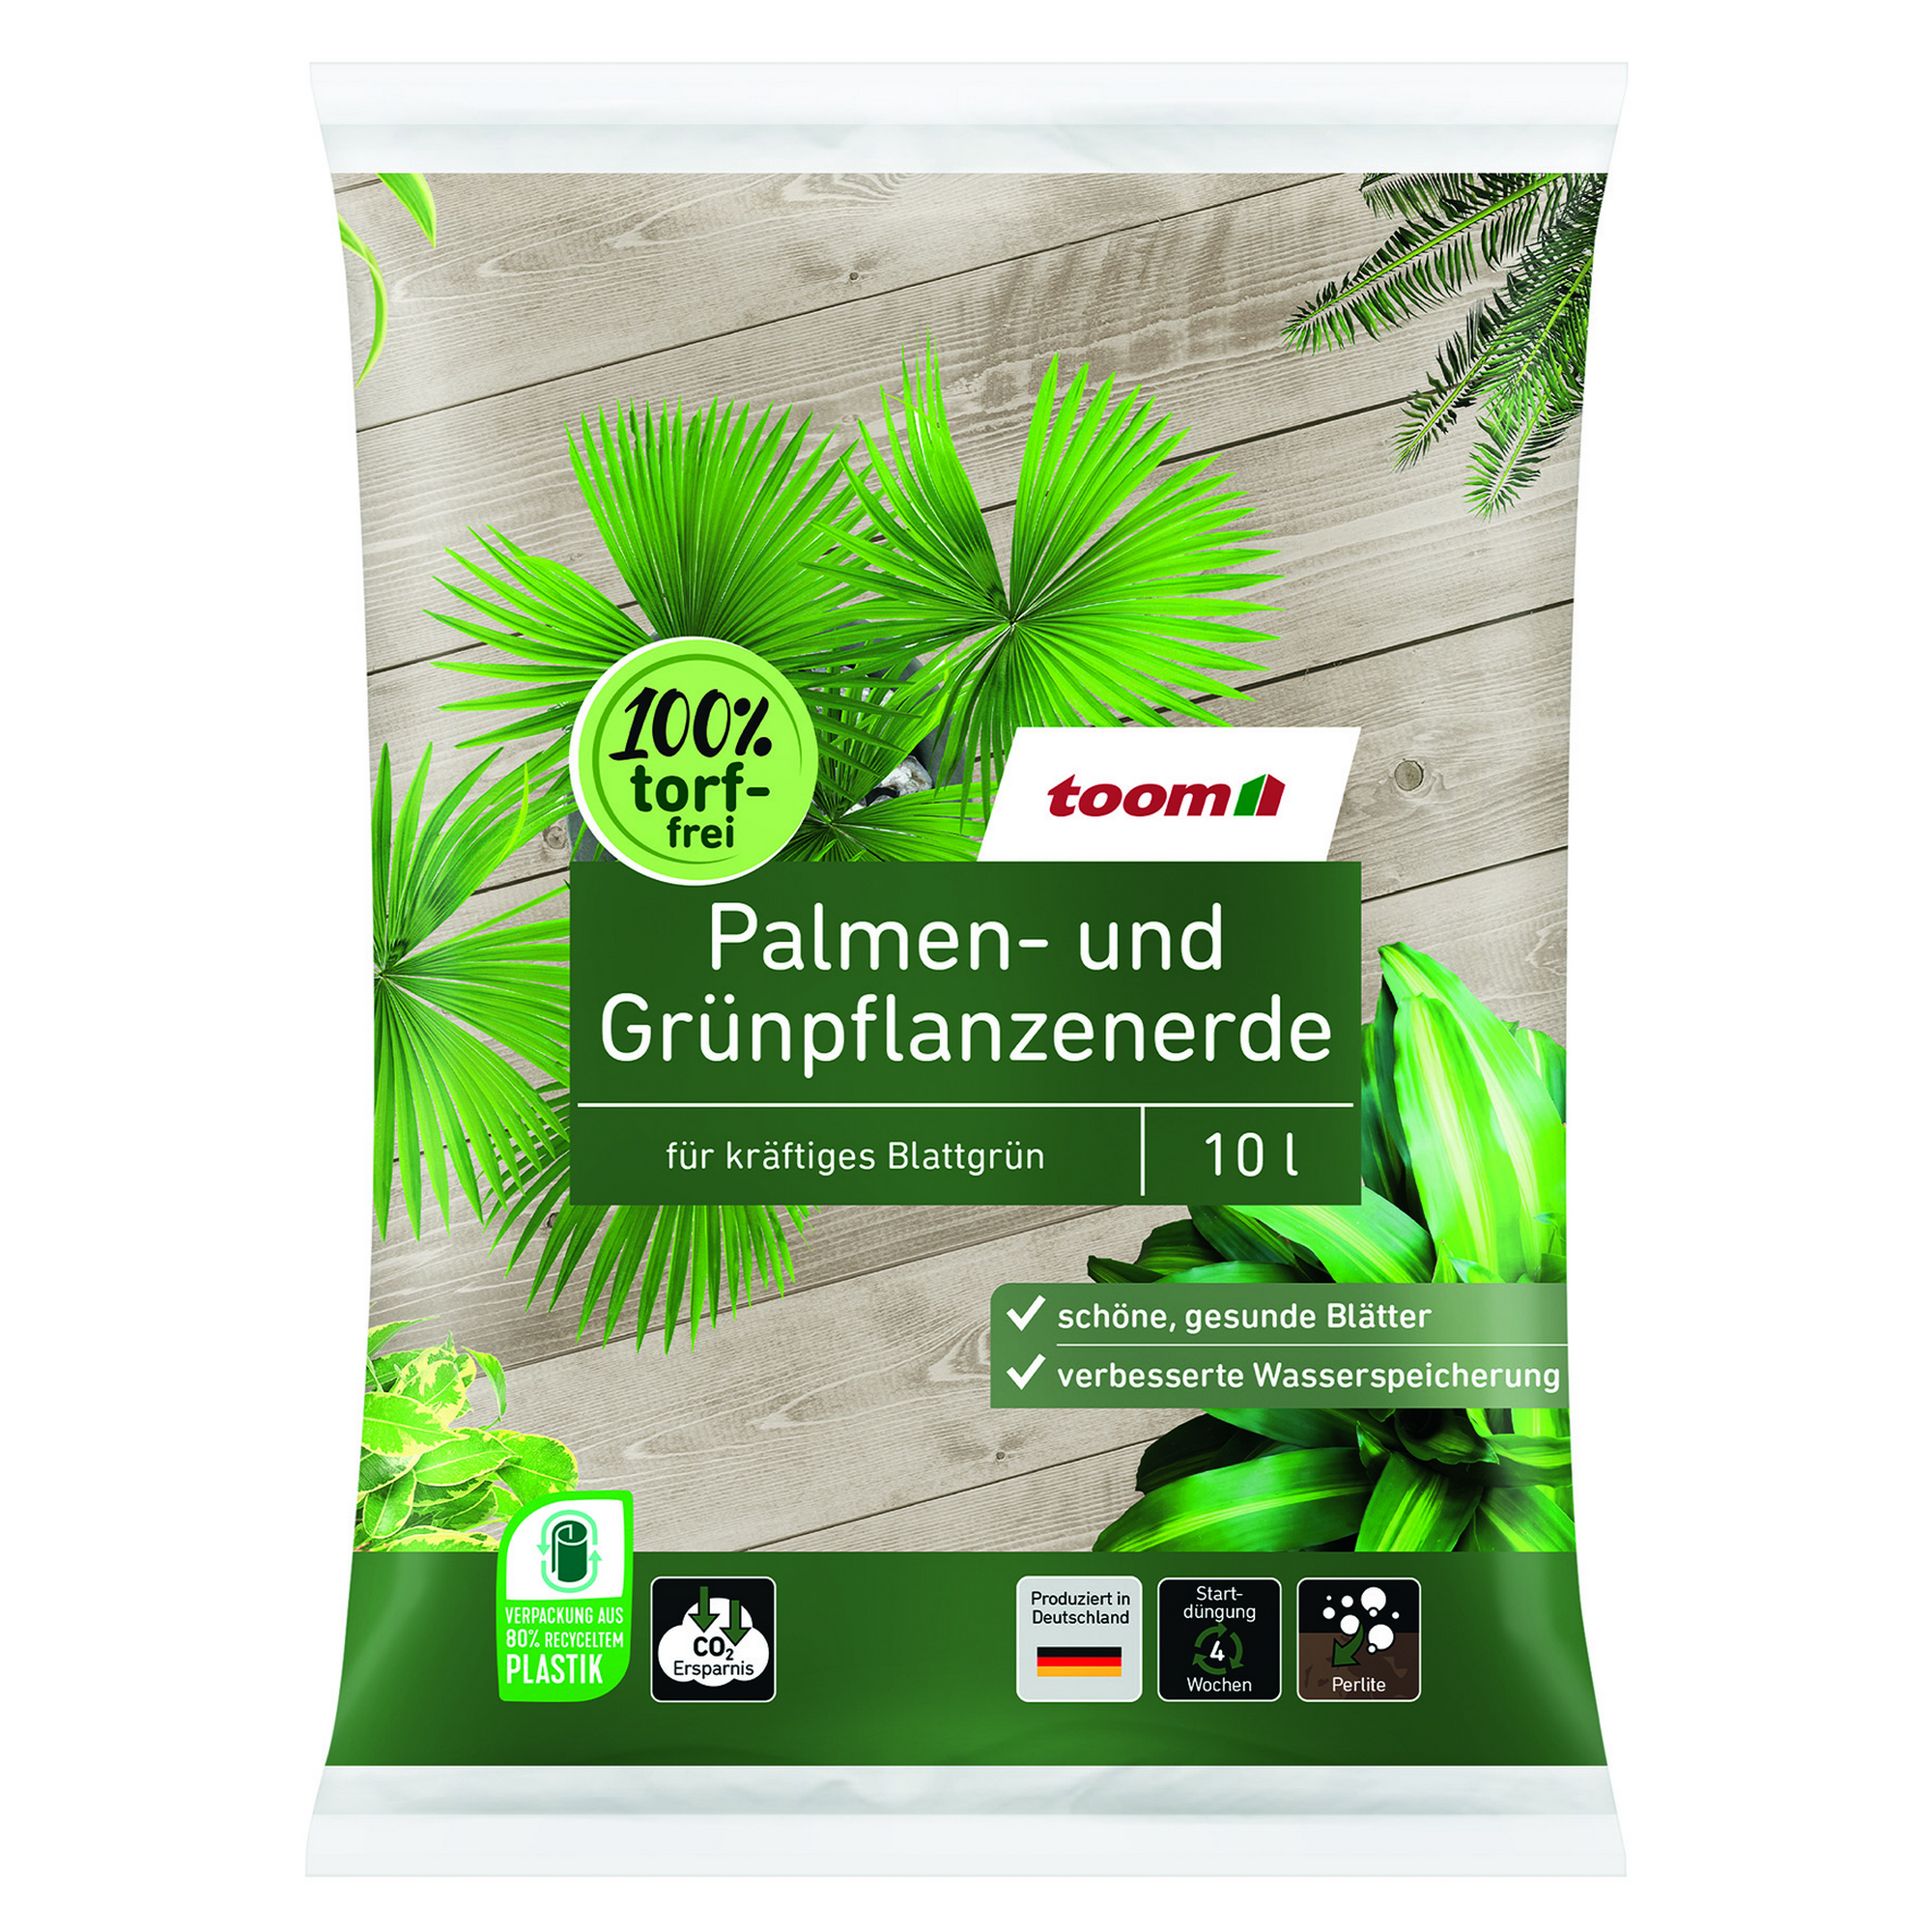 Palmen- und Grünpflanzenerde torffrei 10 l + product picture